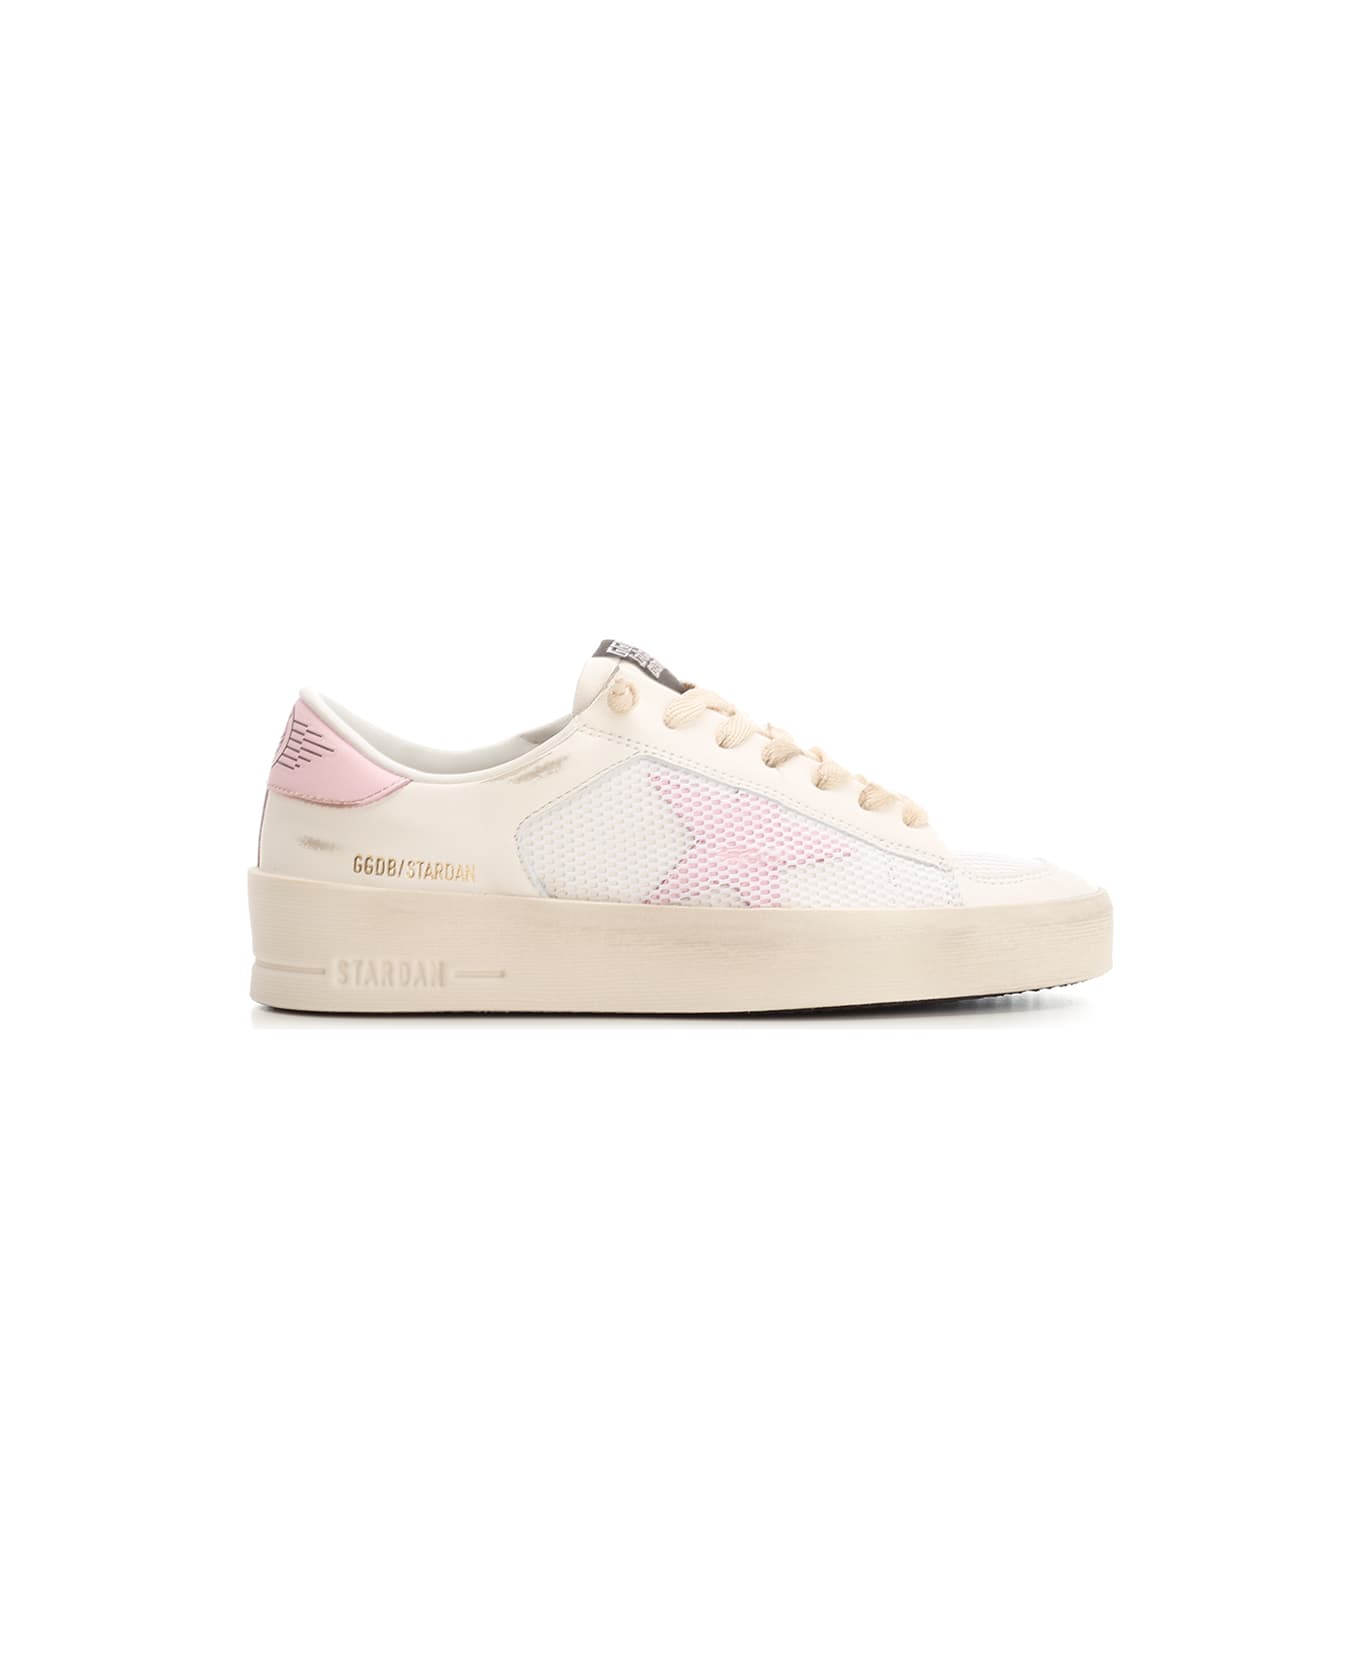 Golden Goose Stardan Mesh Sneakers - White/Orchid Pink